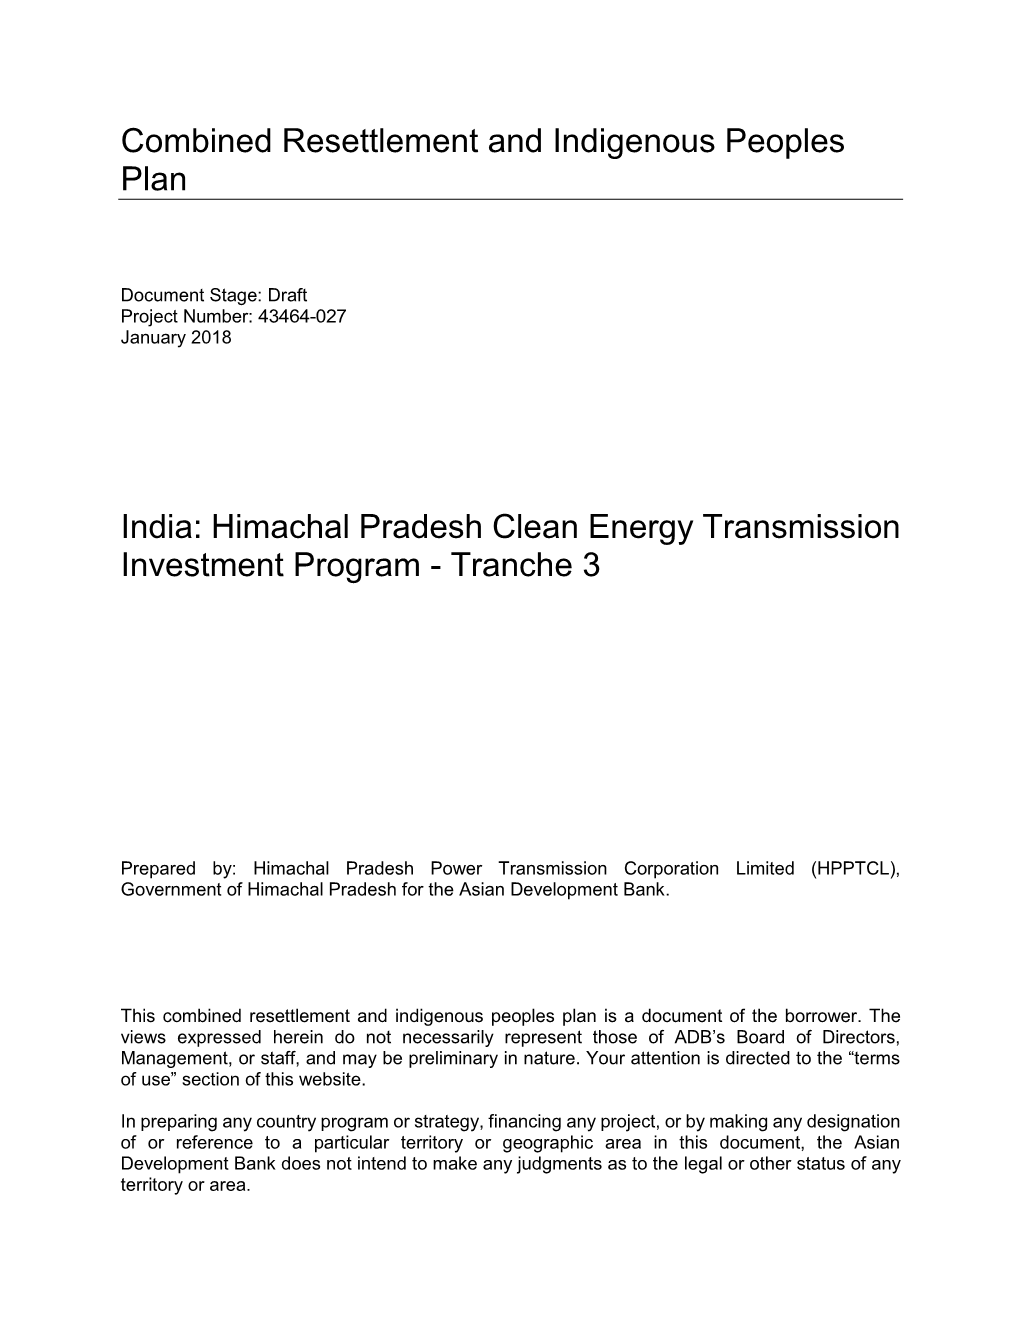 Himachal Pradesh Clean Energy Transmission Investment Program - Tranche 3